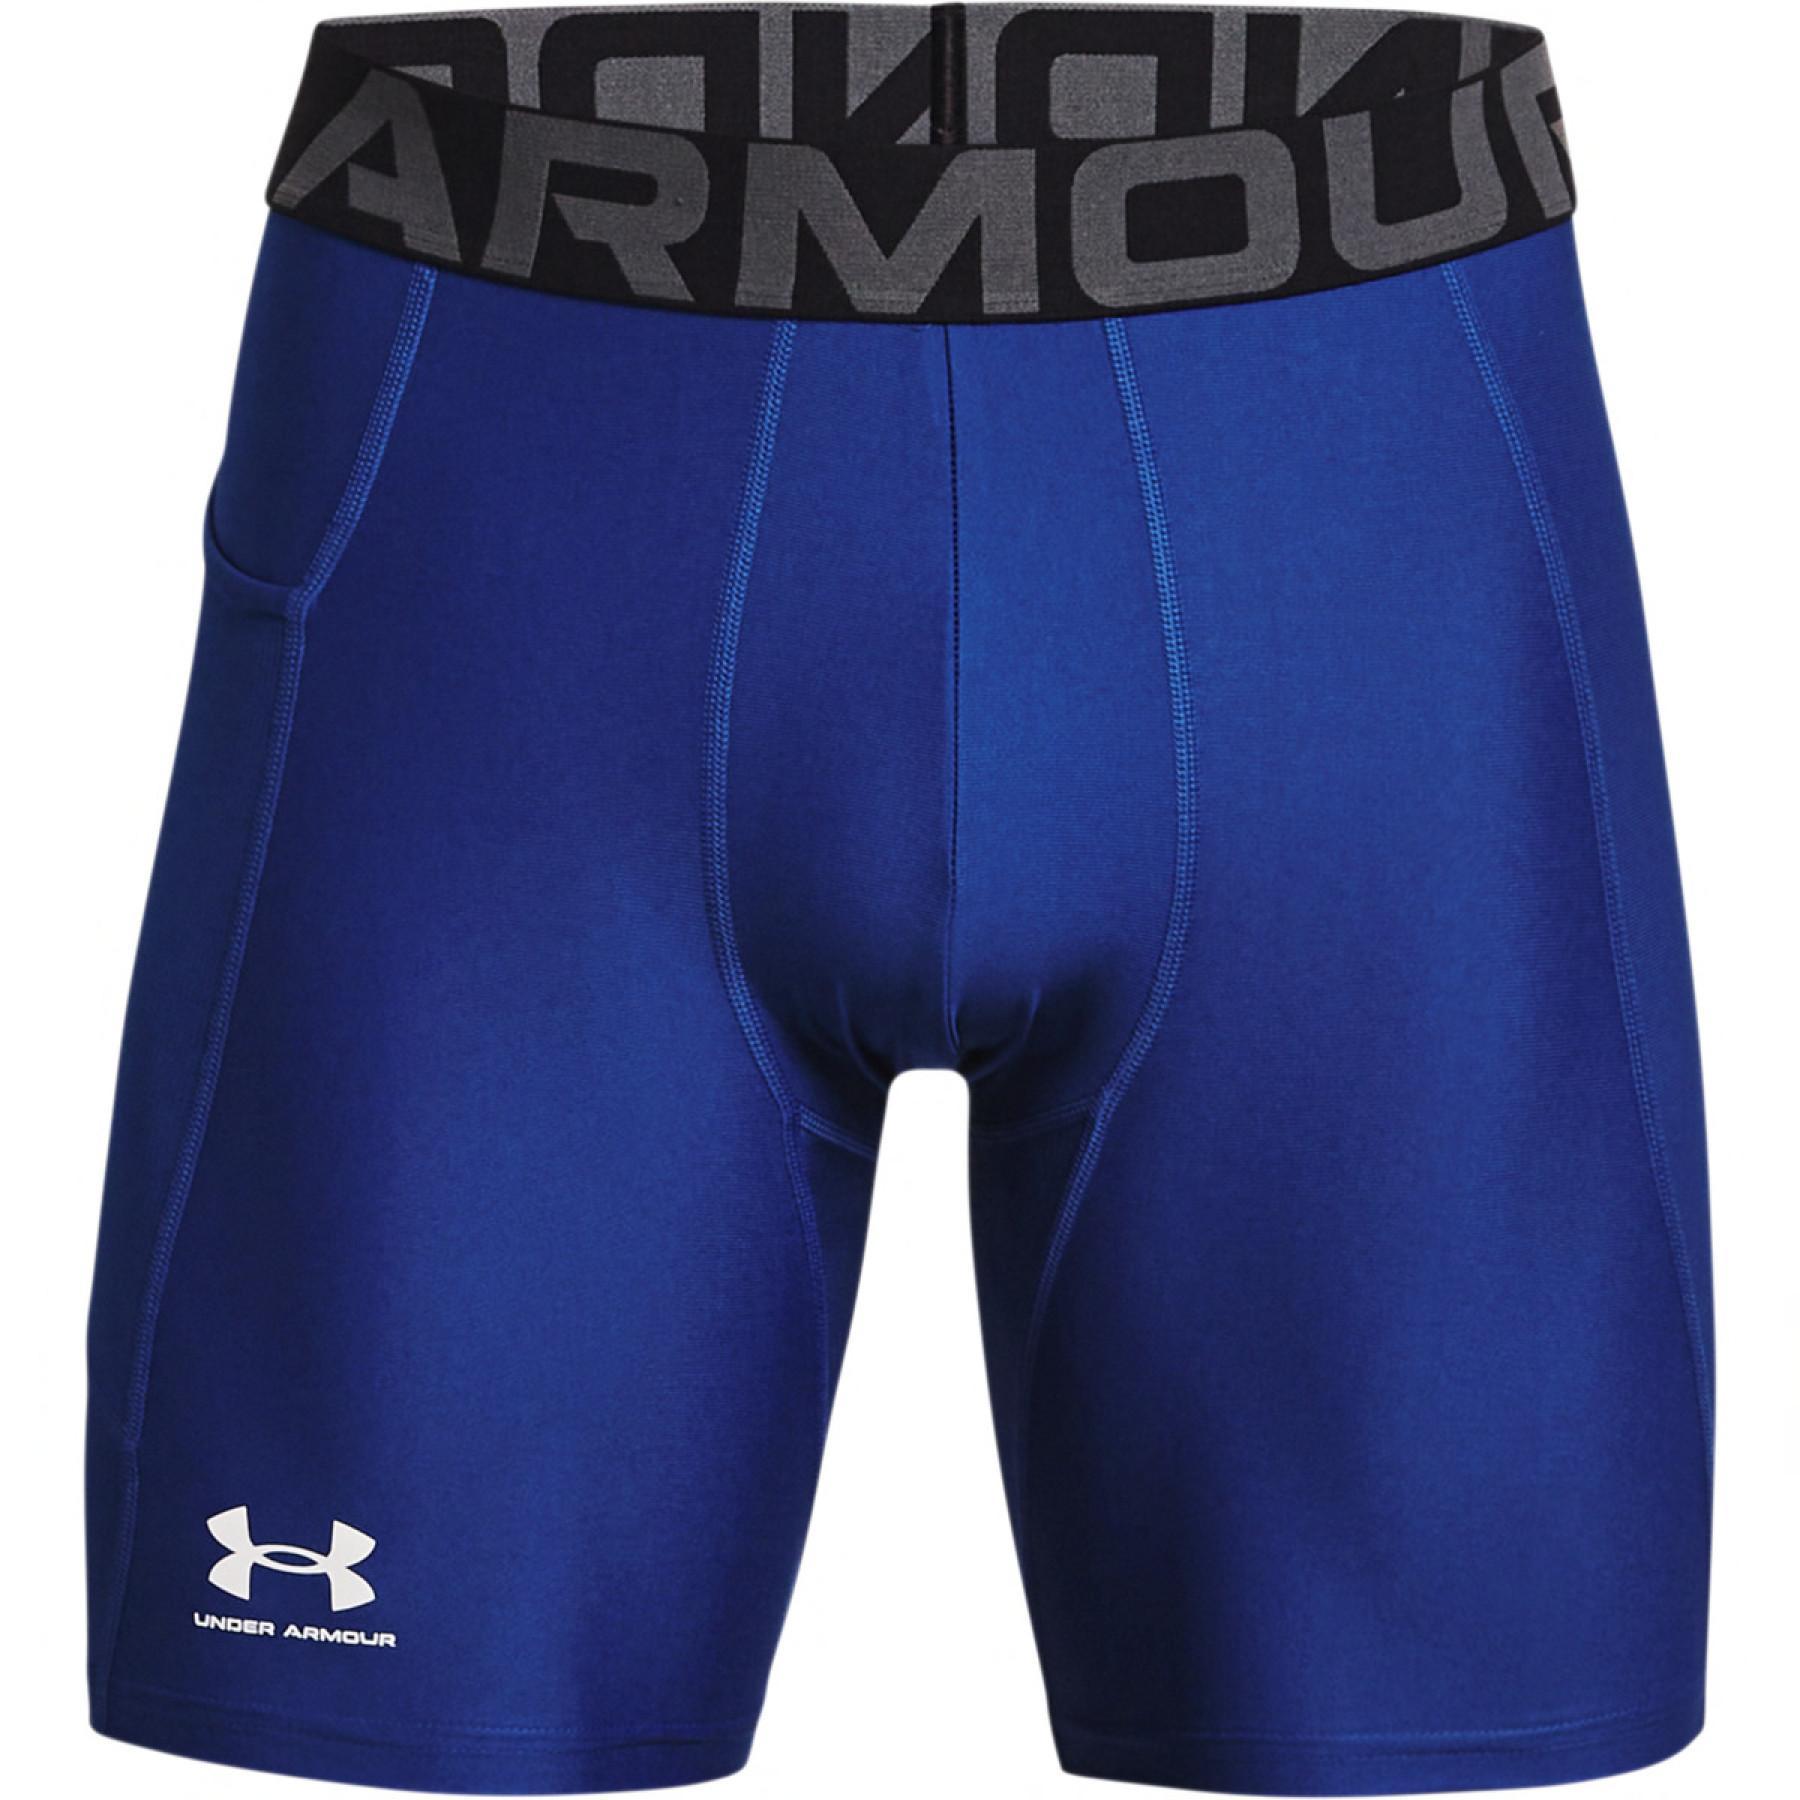 Heatgear compression shorts Under Armour